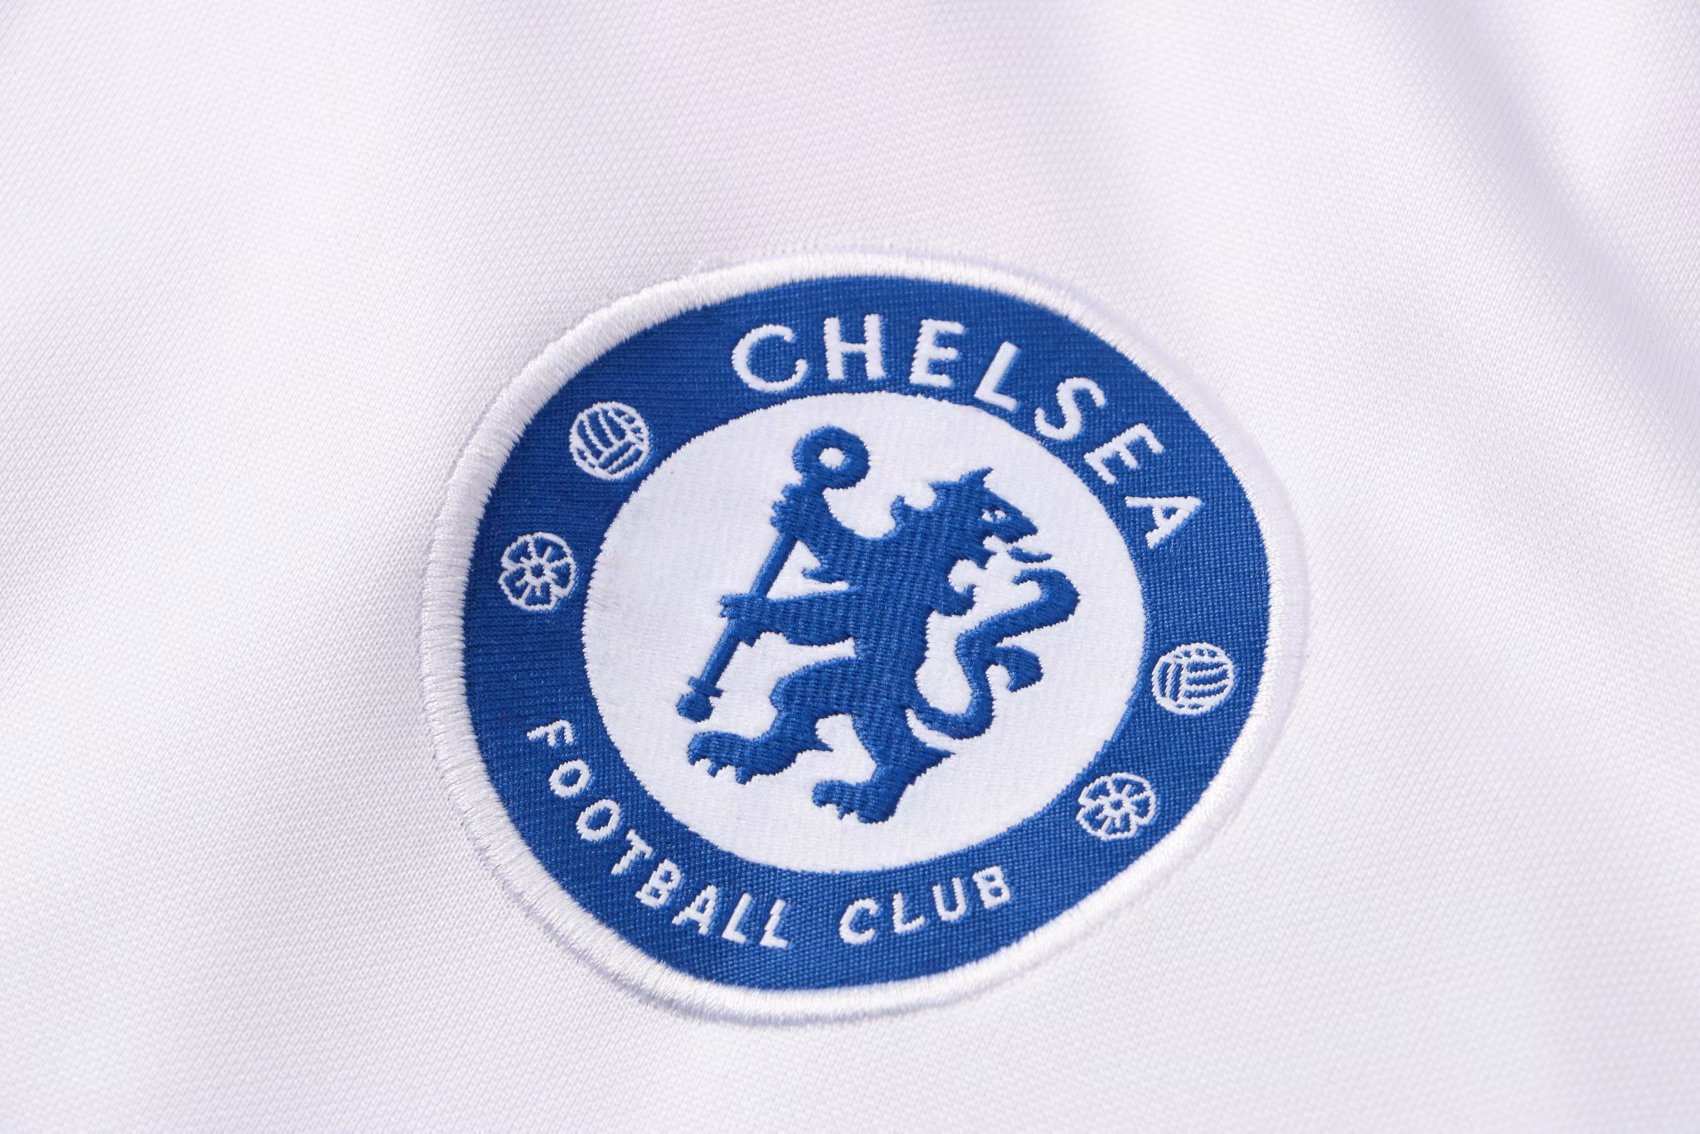 2021/22 Chelsea White Soccer Training Suit (Jacket + Pants) Mens